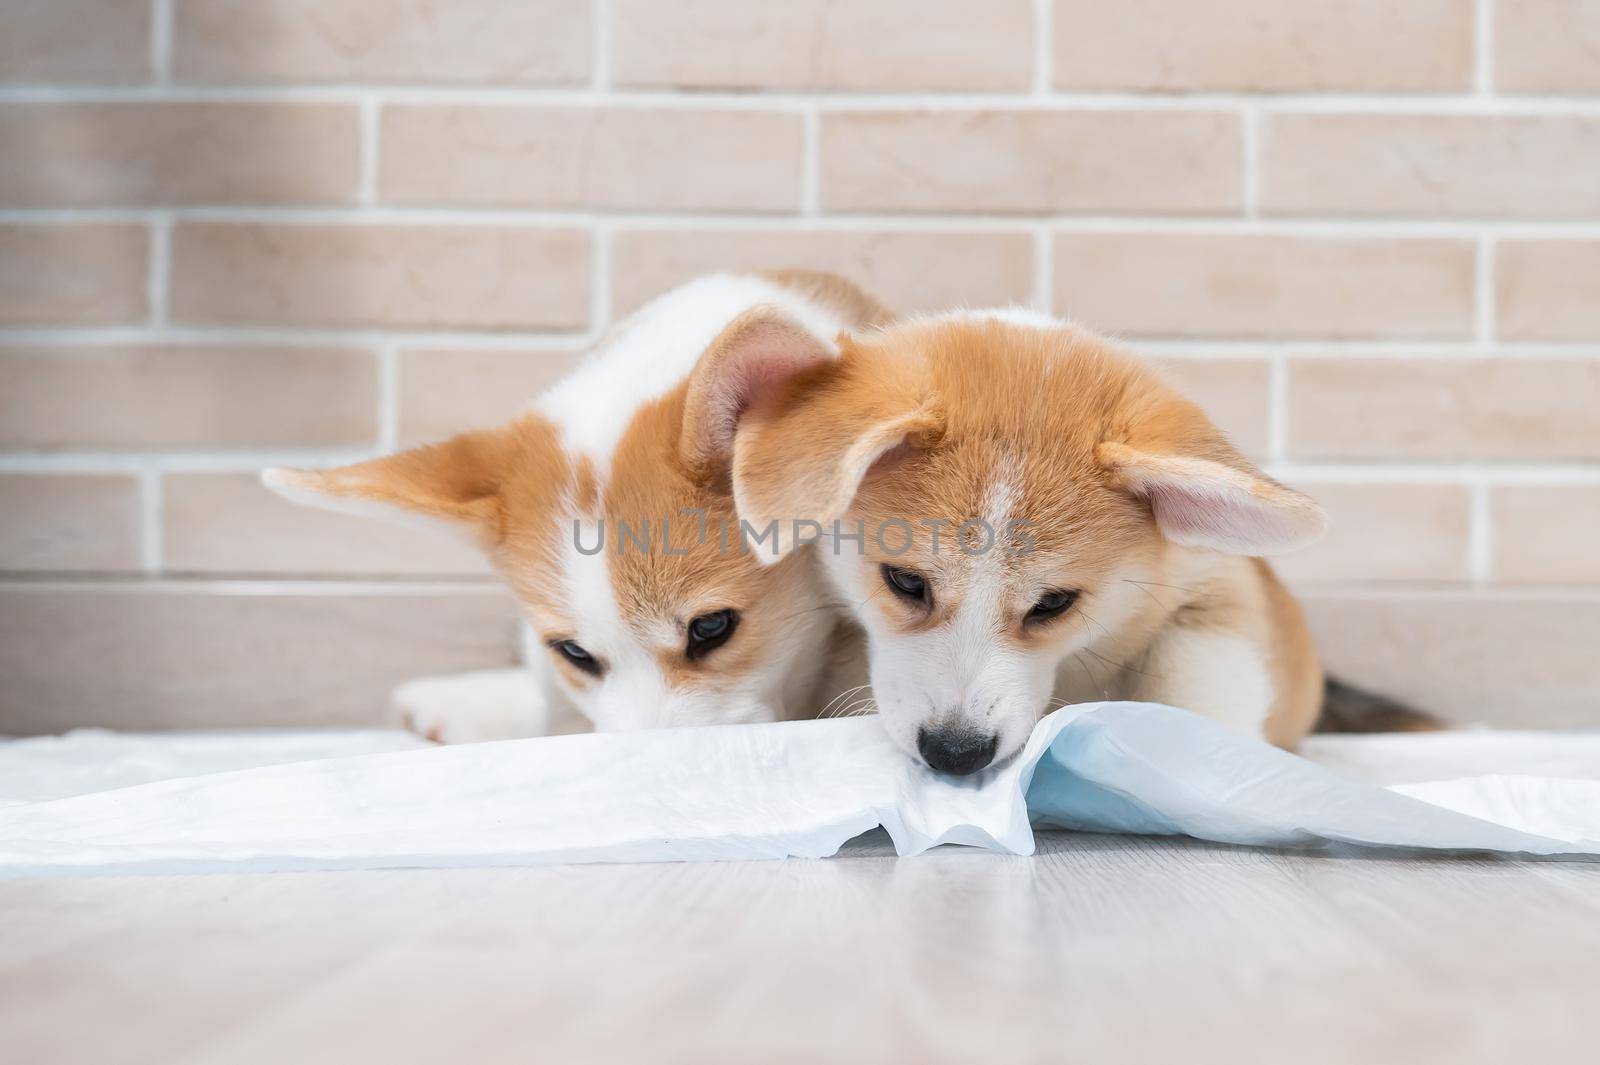 Two pembroke corgi puppies on a disposable diaper